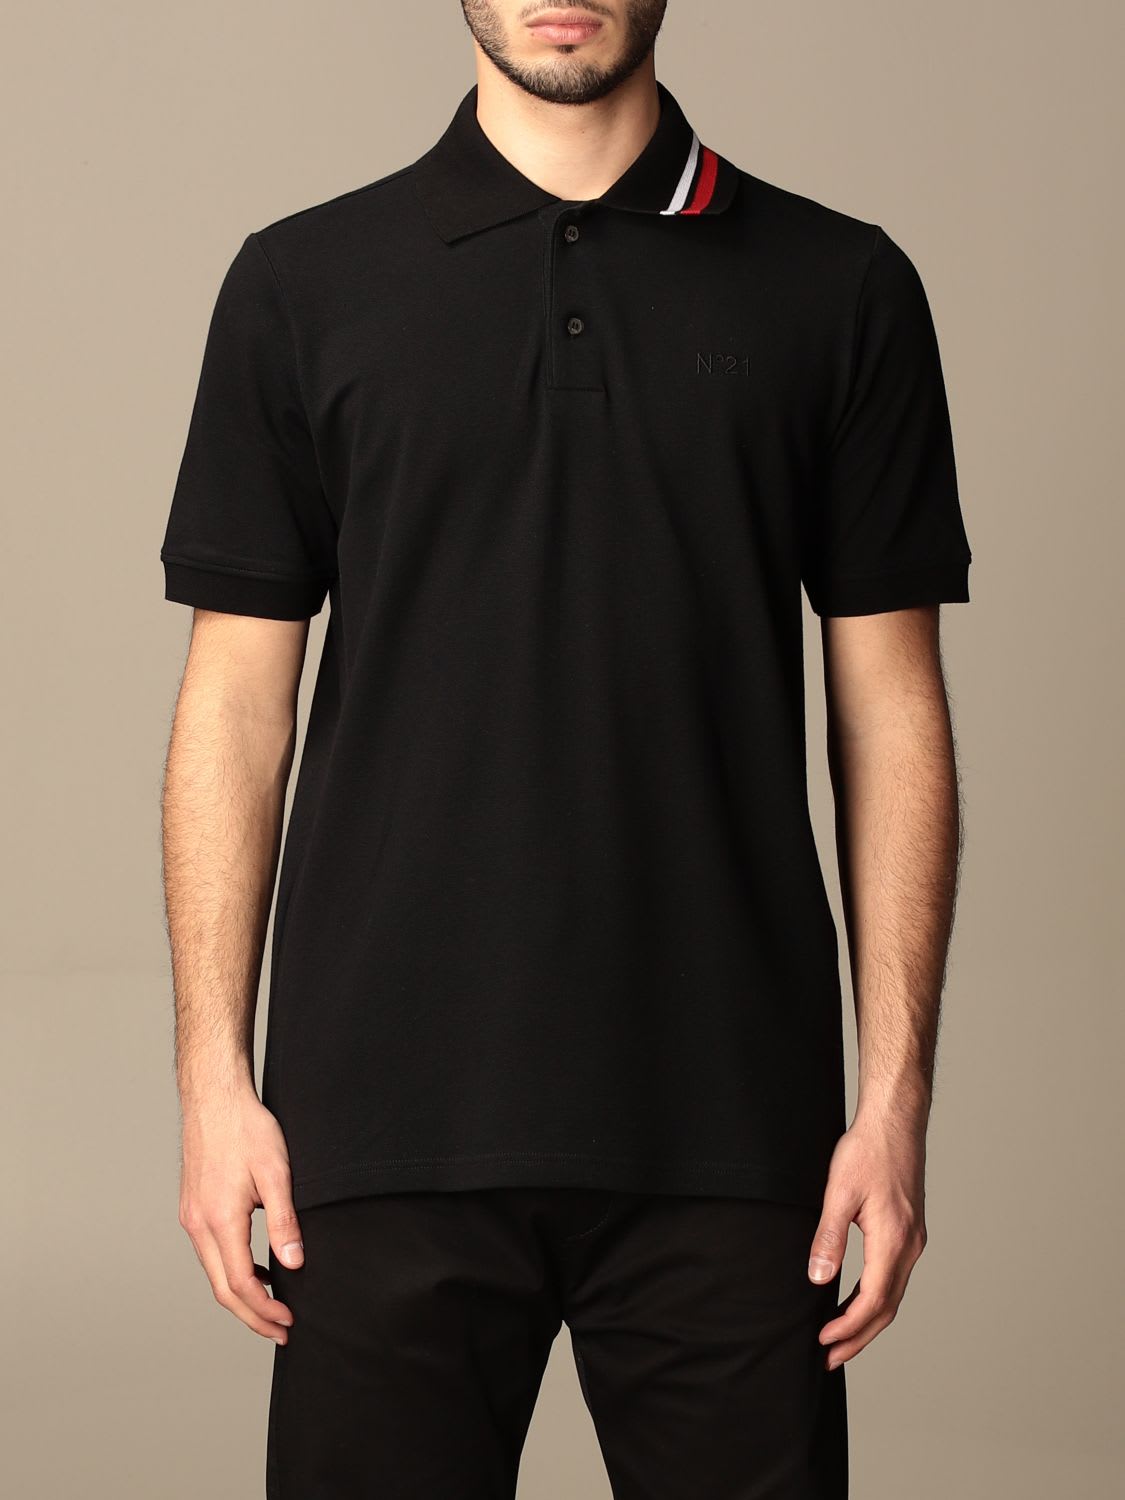 N.21 N° 21 Polo Shirt N ° 21 Basic Cotton Polo Shirt With Striped Details